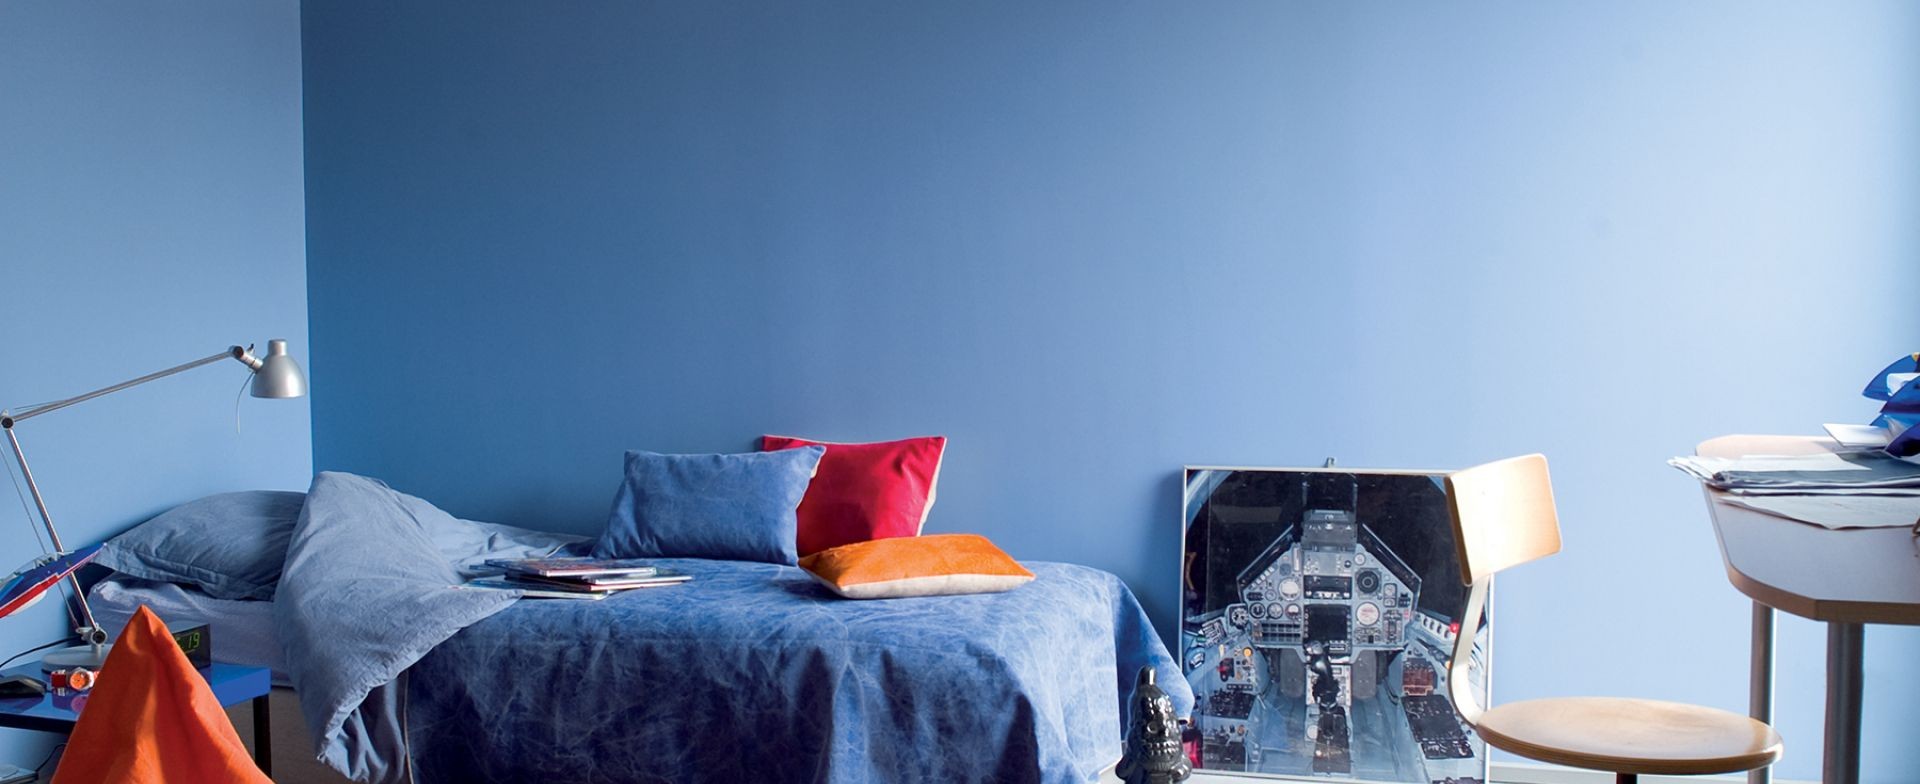 dormitorio juvenil azul